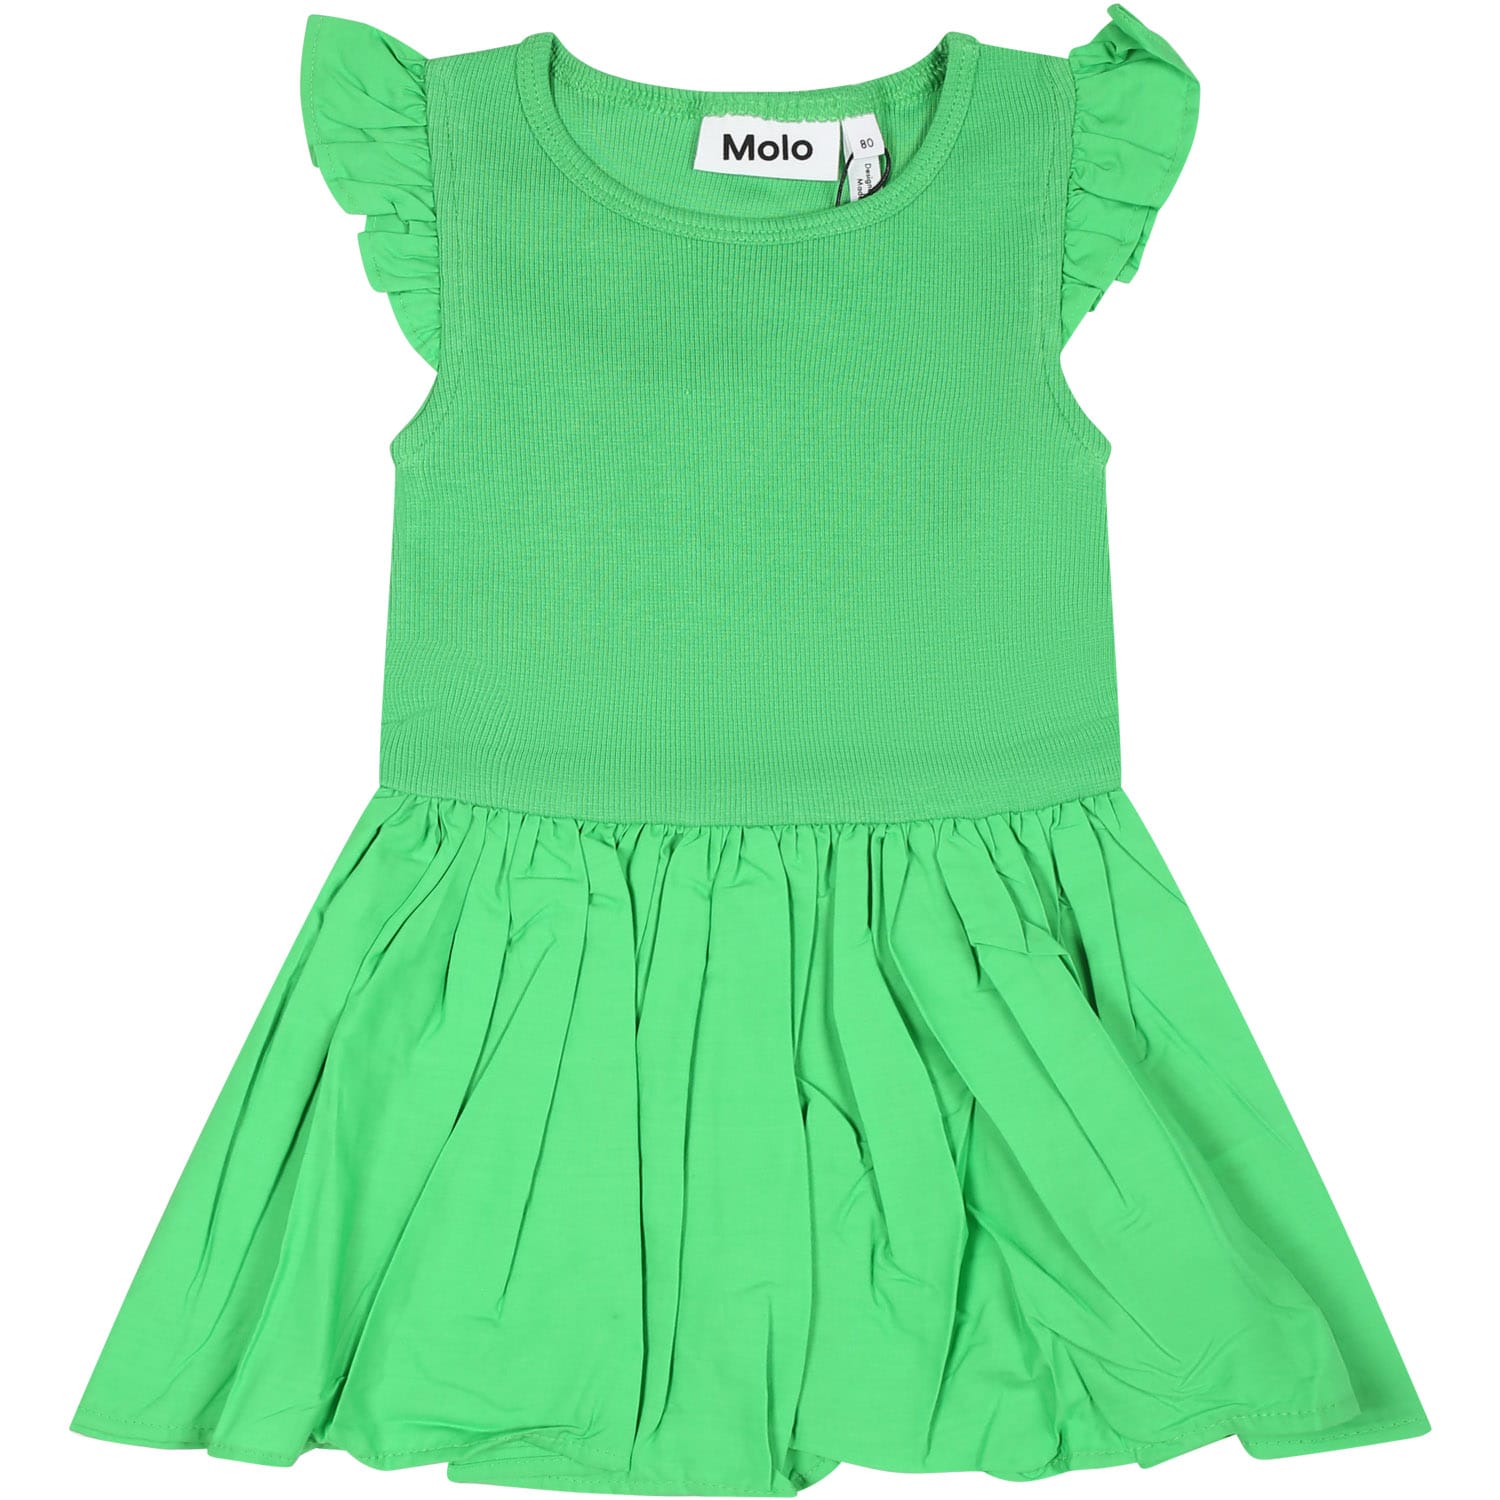 Molo Kids' Green Dress For Baby Girl